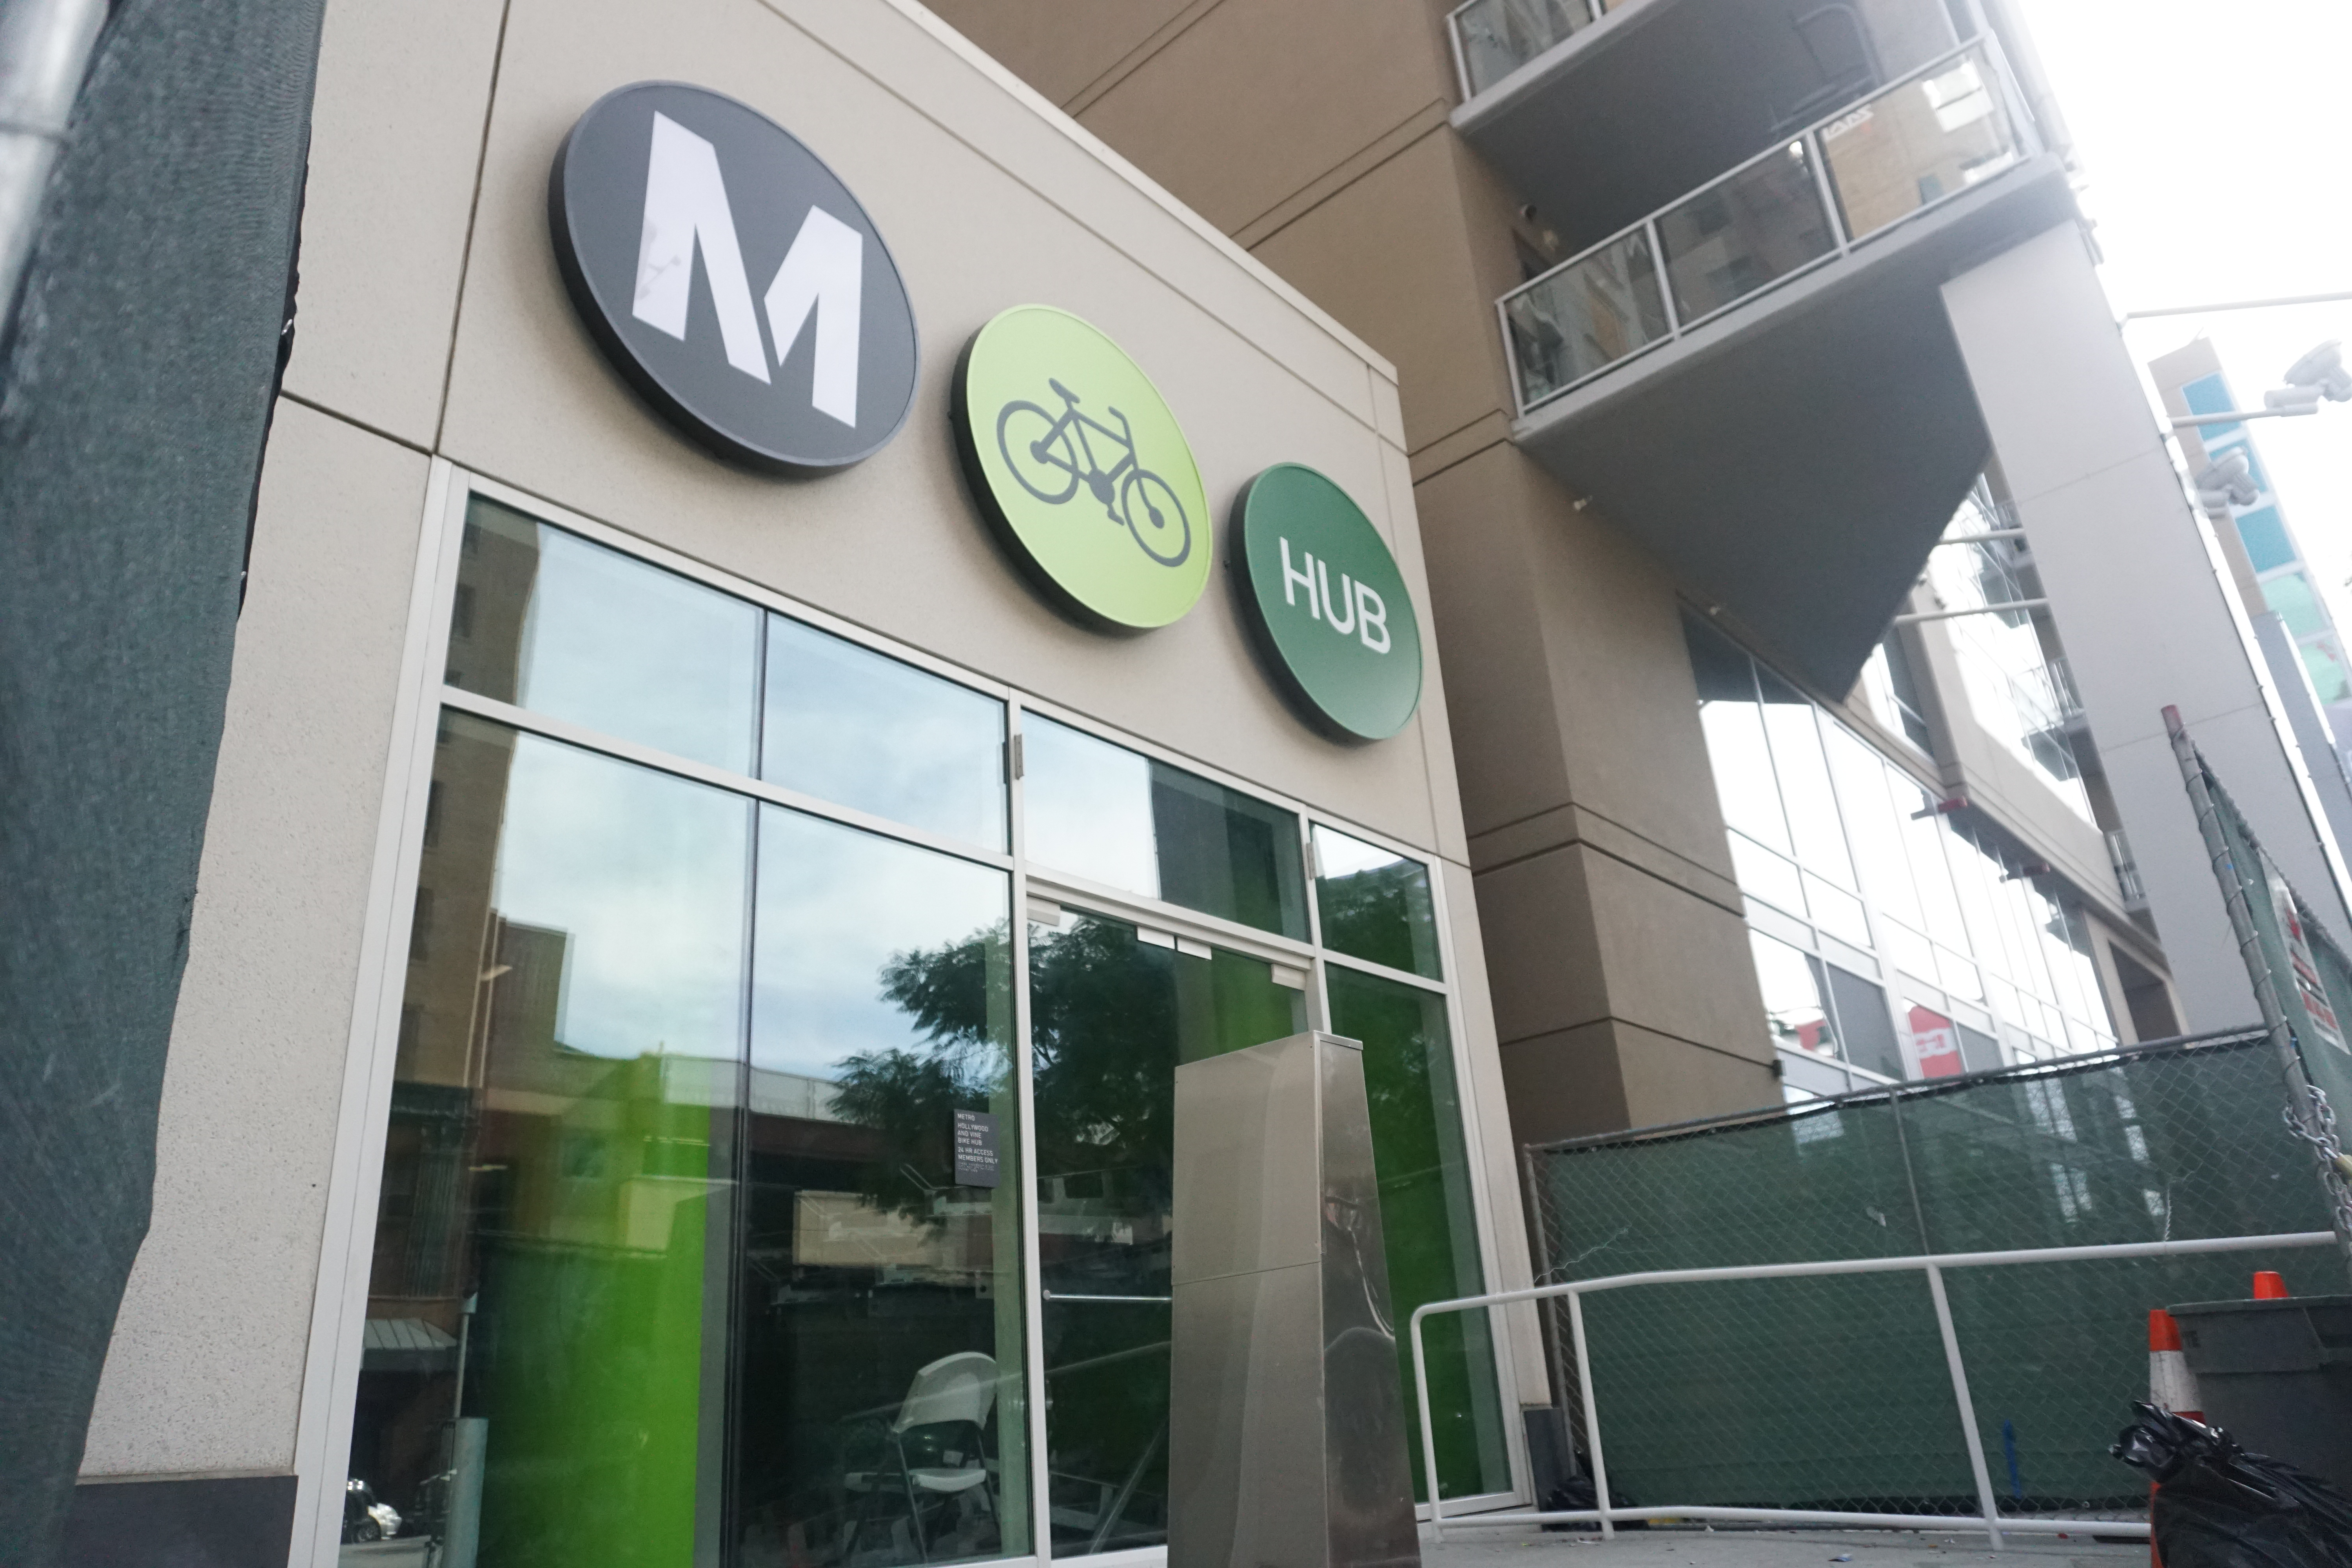 Metro bike hub